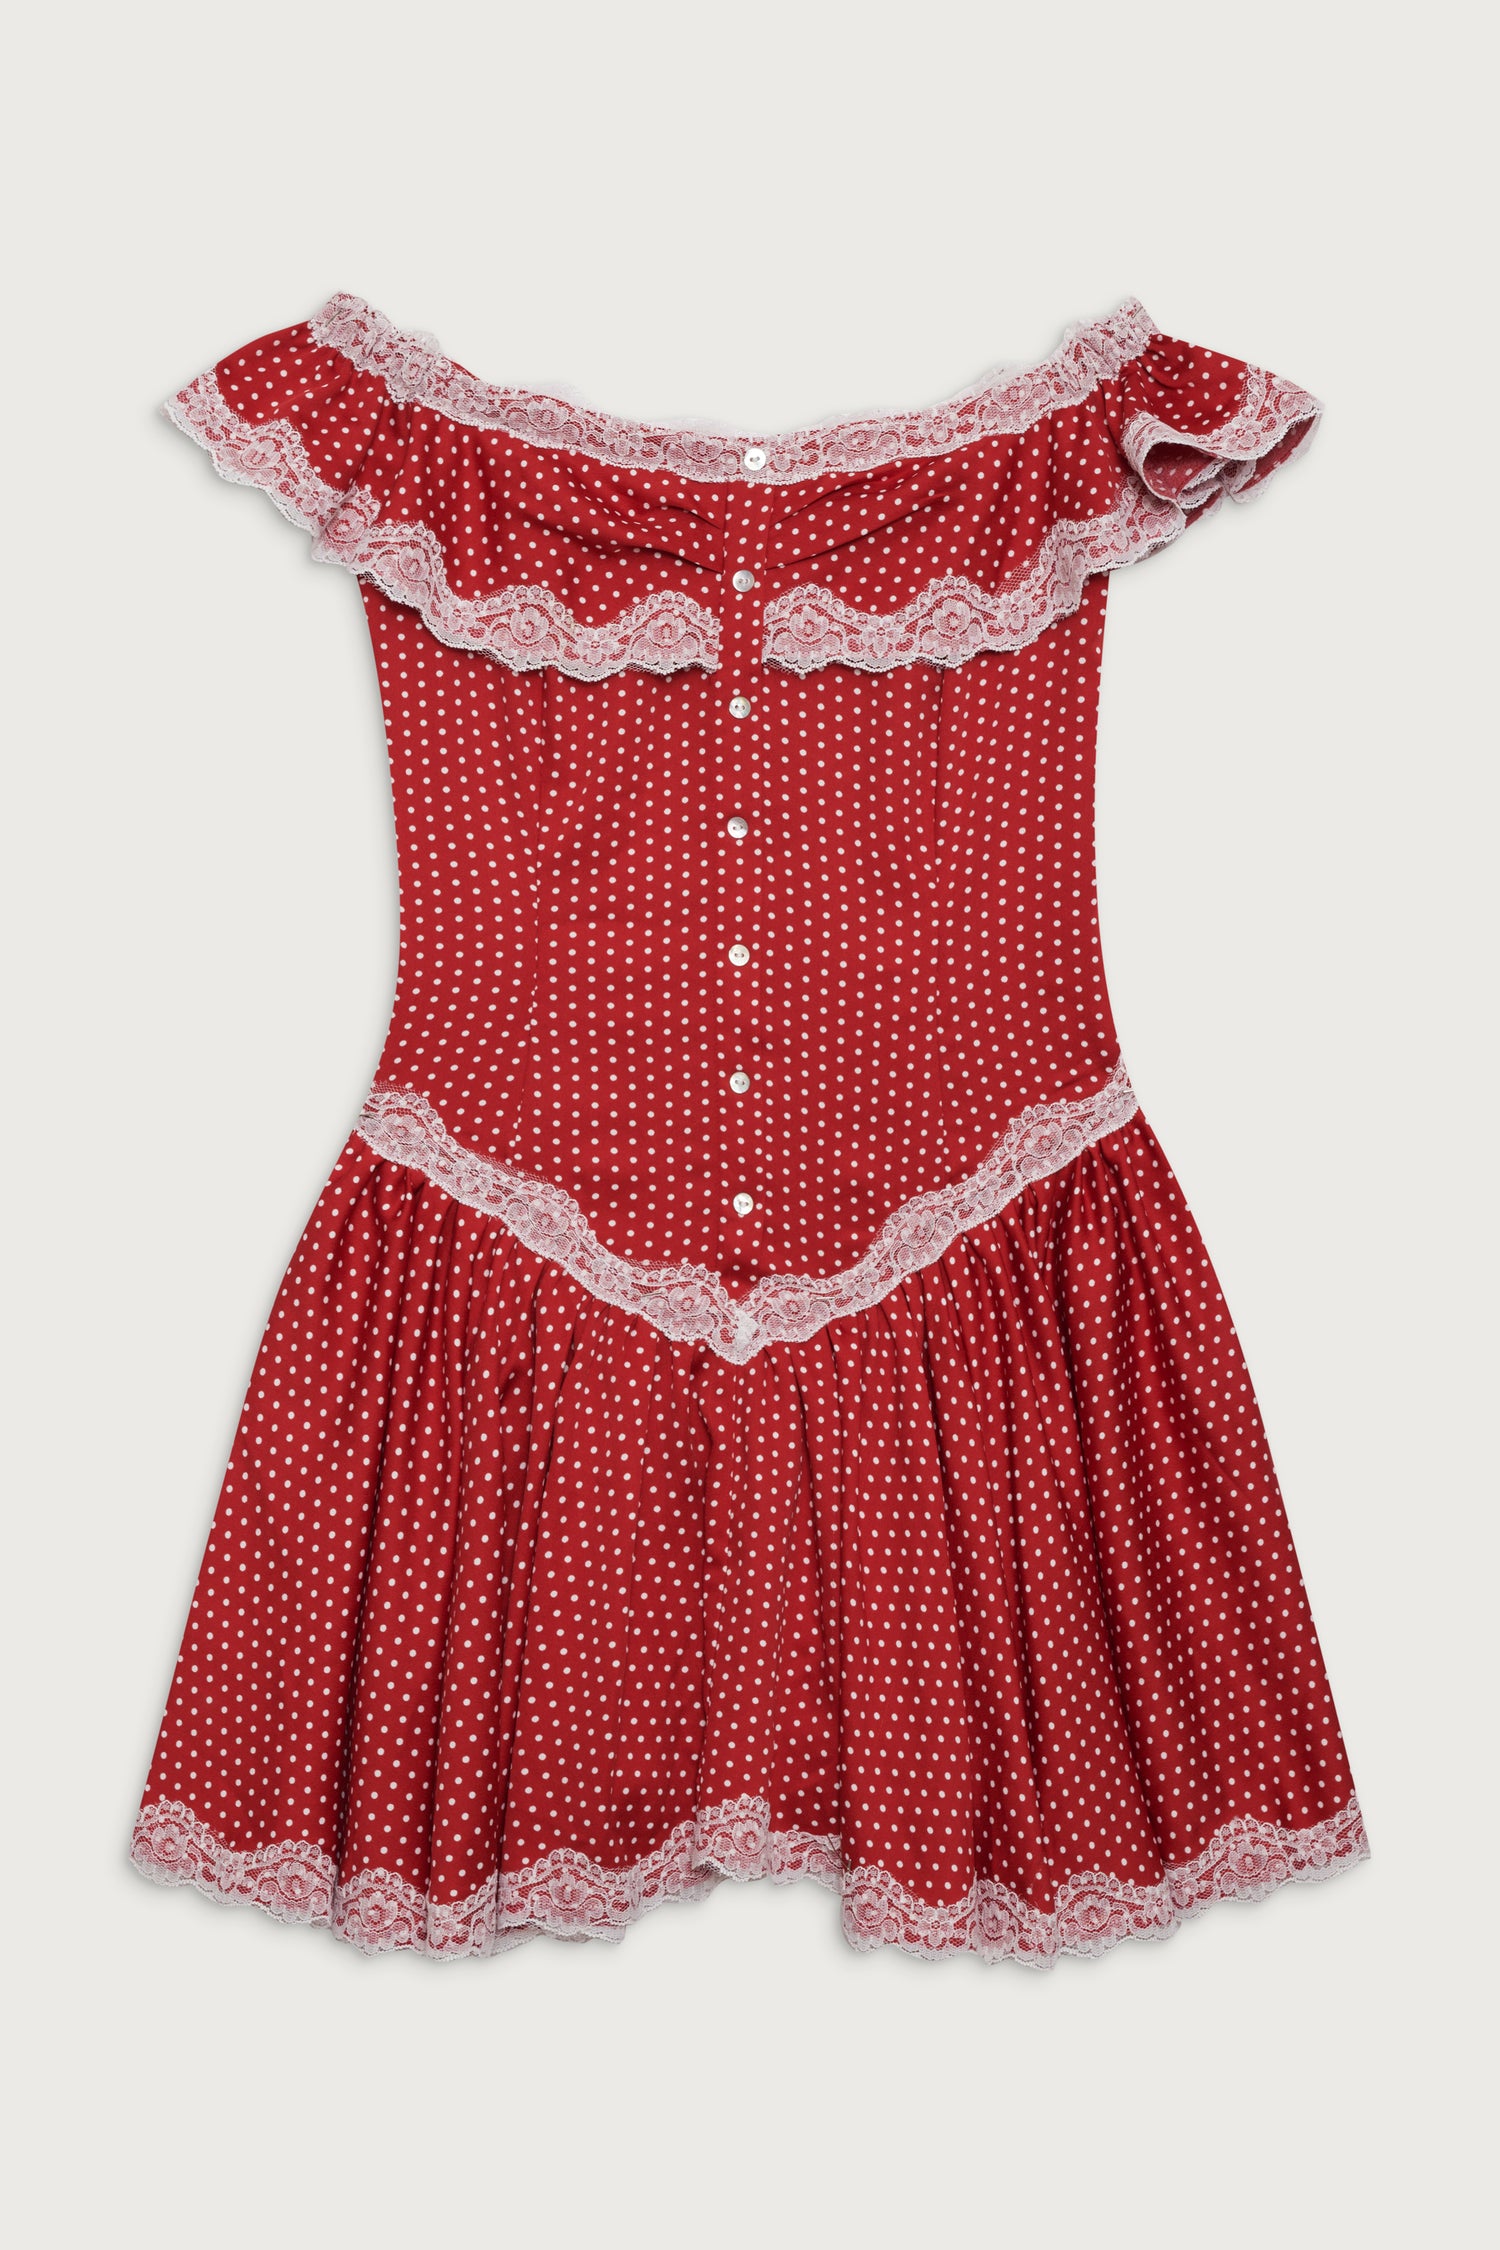 Charli Mini Dress - Scarlet Dot